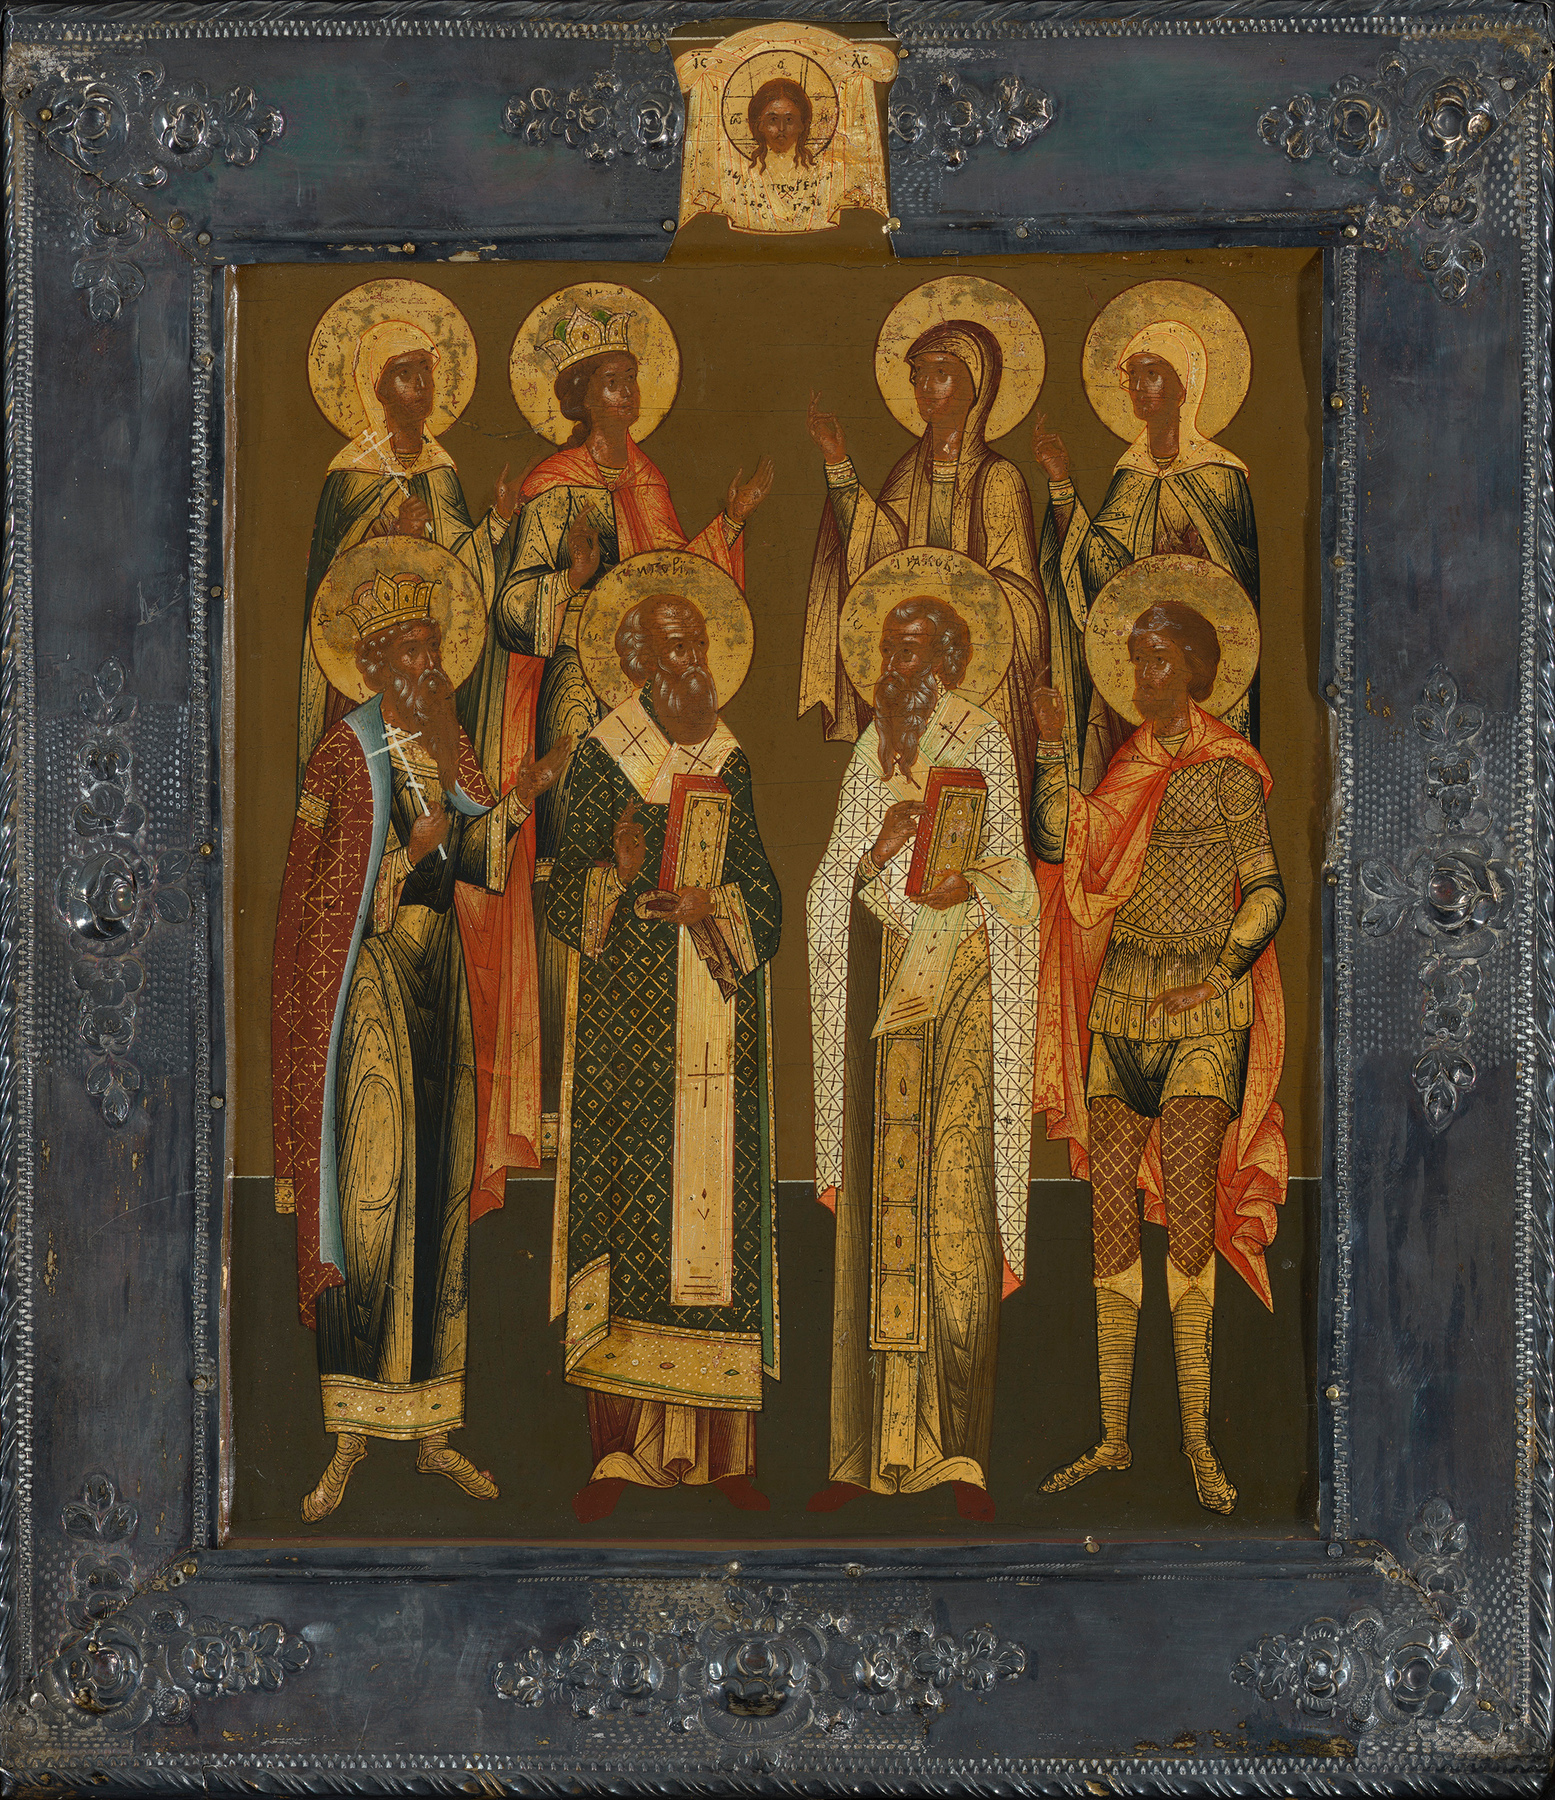 The Eight Chosen Saints.